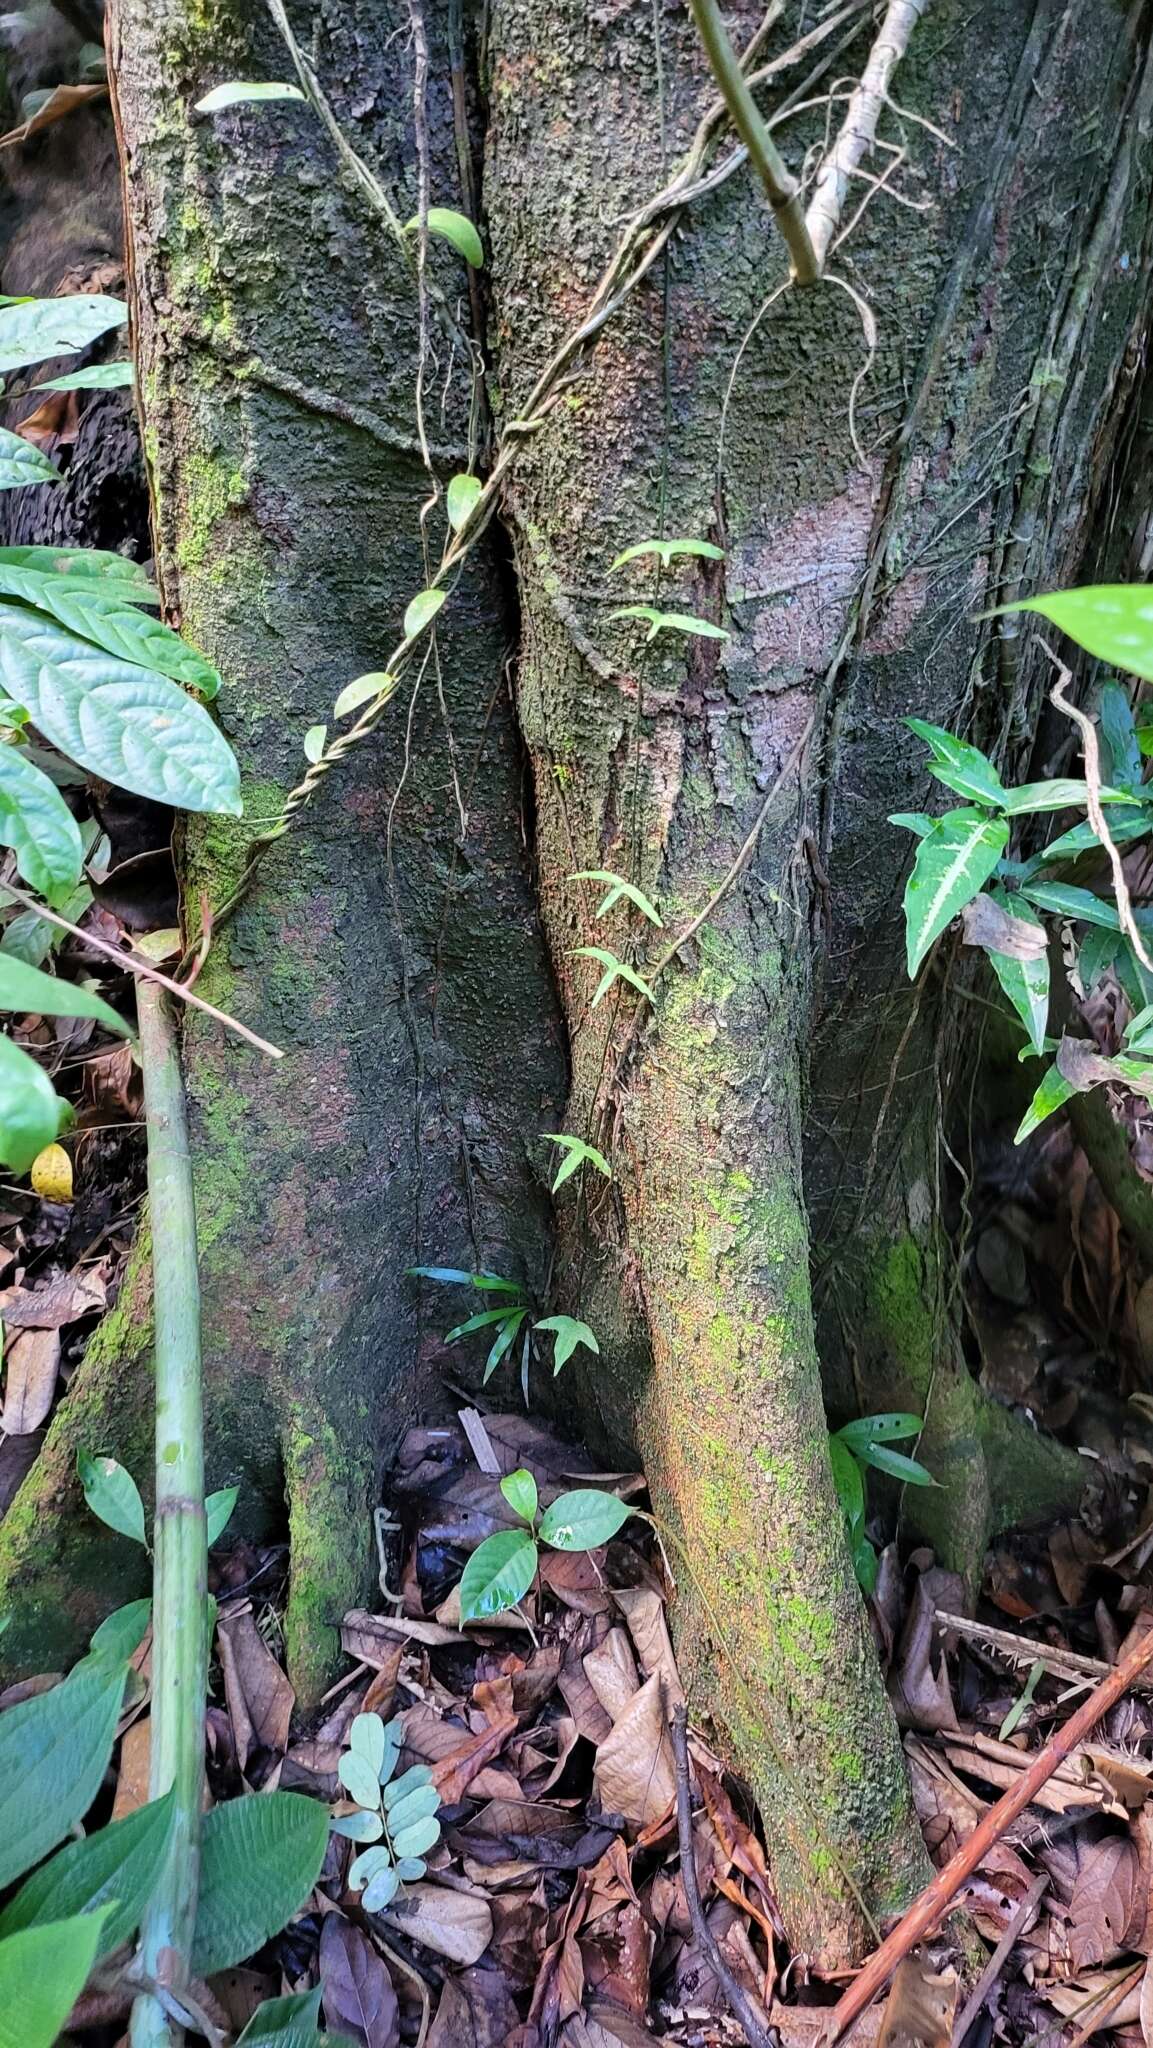 Image of Adenia cordifolia (Bl.) Engl.